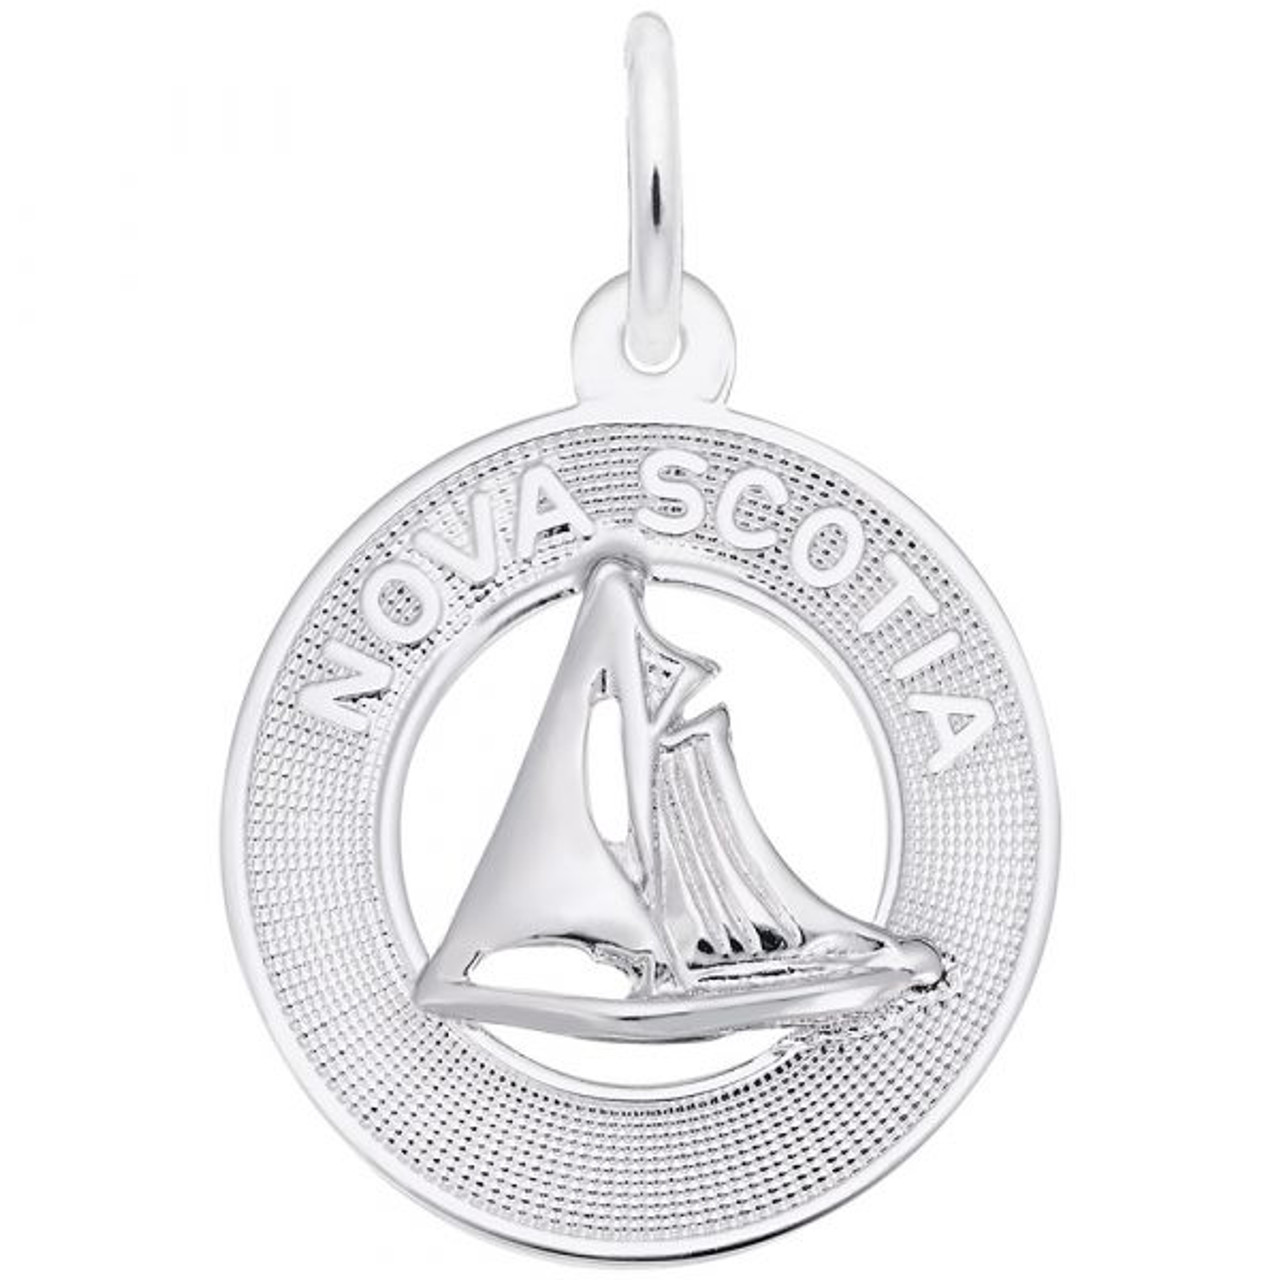 Nova Scotia Sailboat Ring Charm -Sterling Silver and 14k White Gold